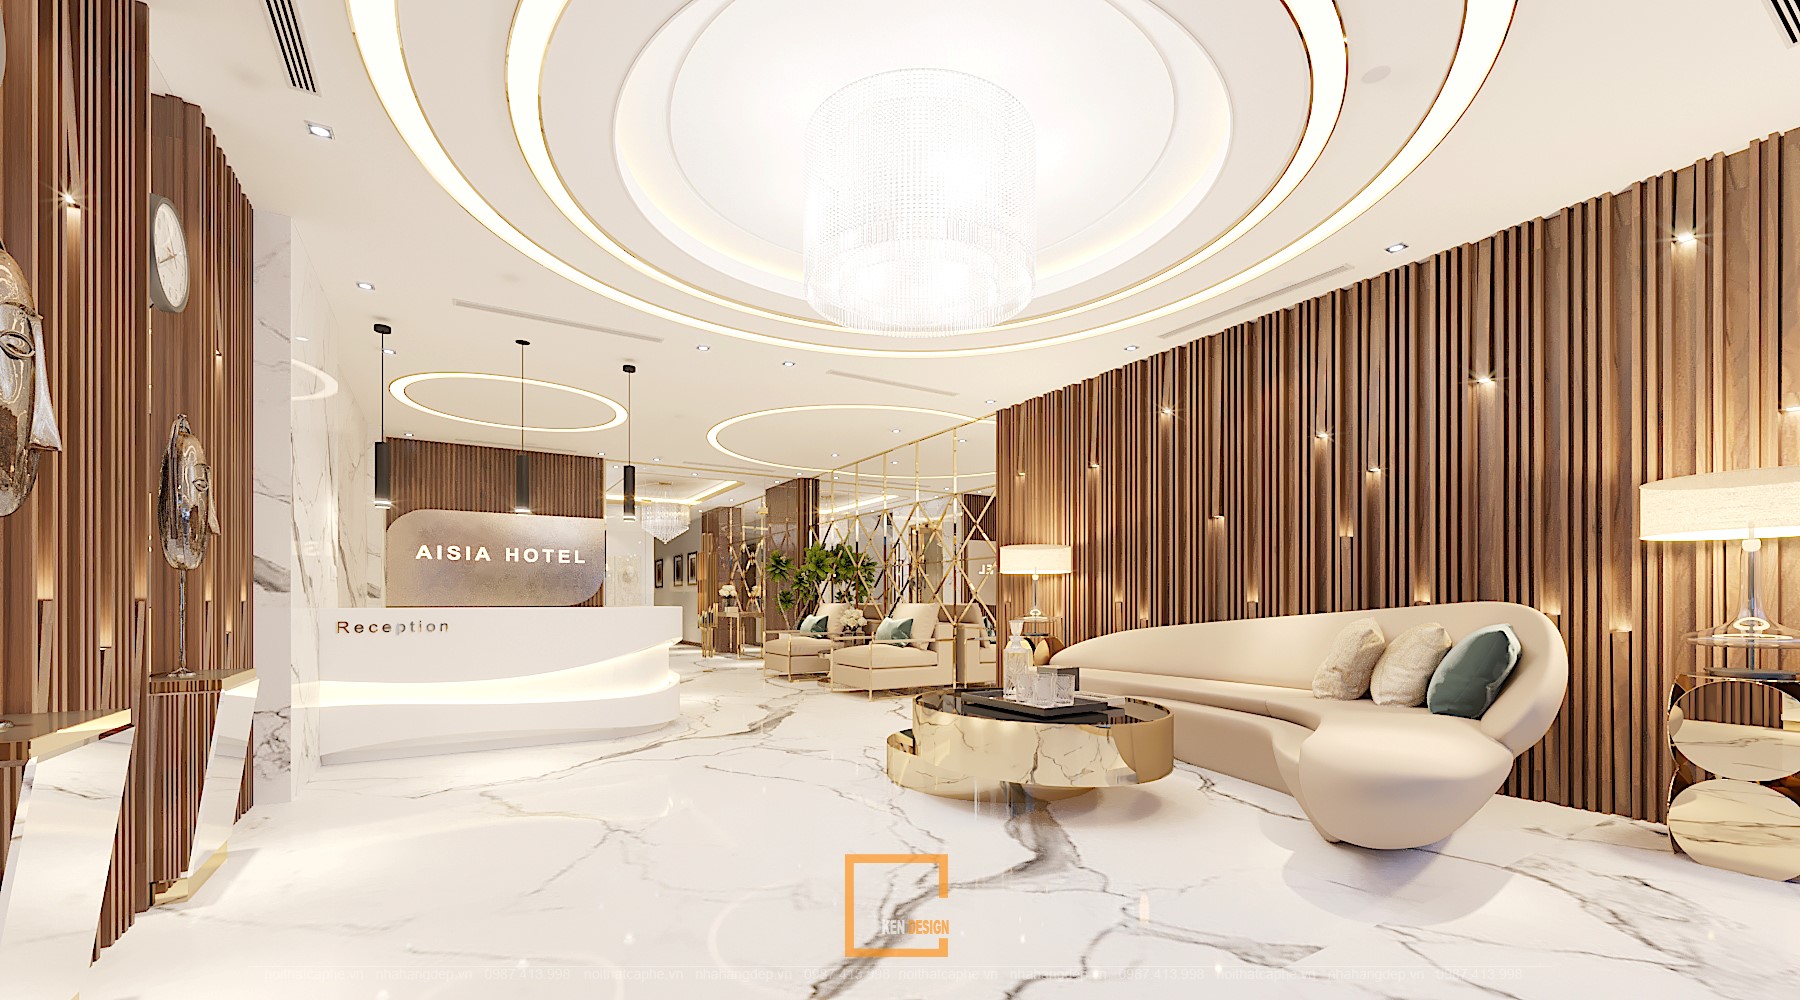 Thiết kế sảnh khách sạn Aisia Hotel – Ken Design